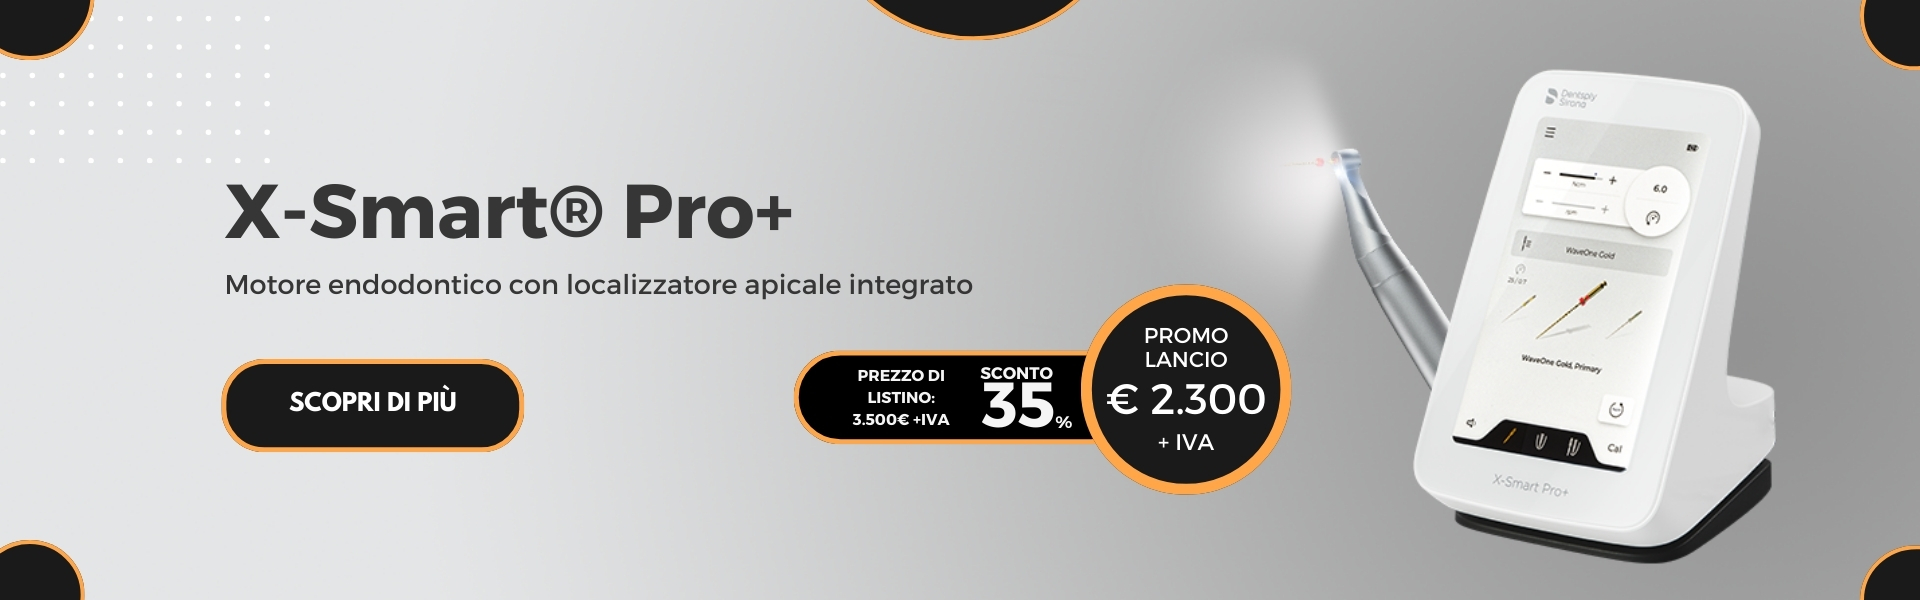 X-Smart® Pro+